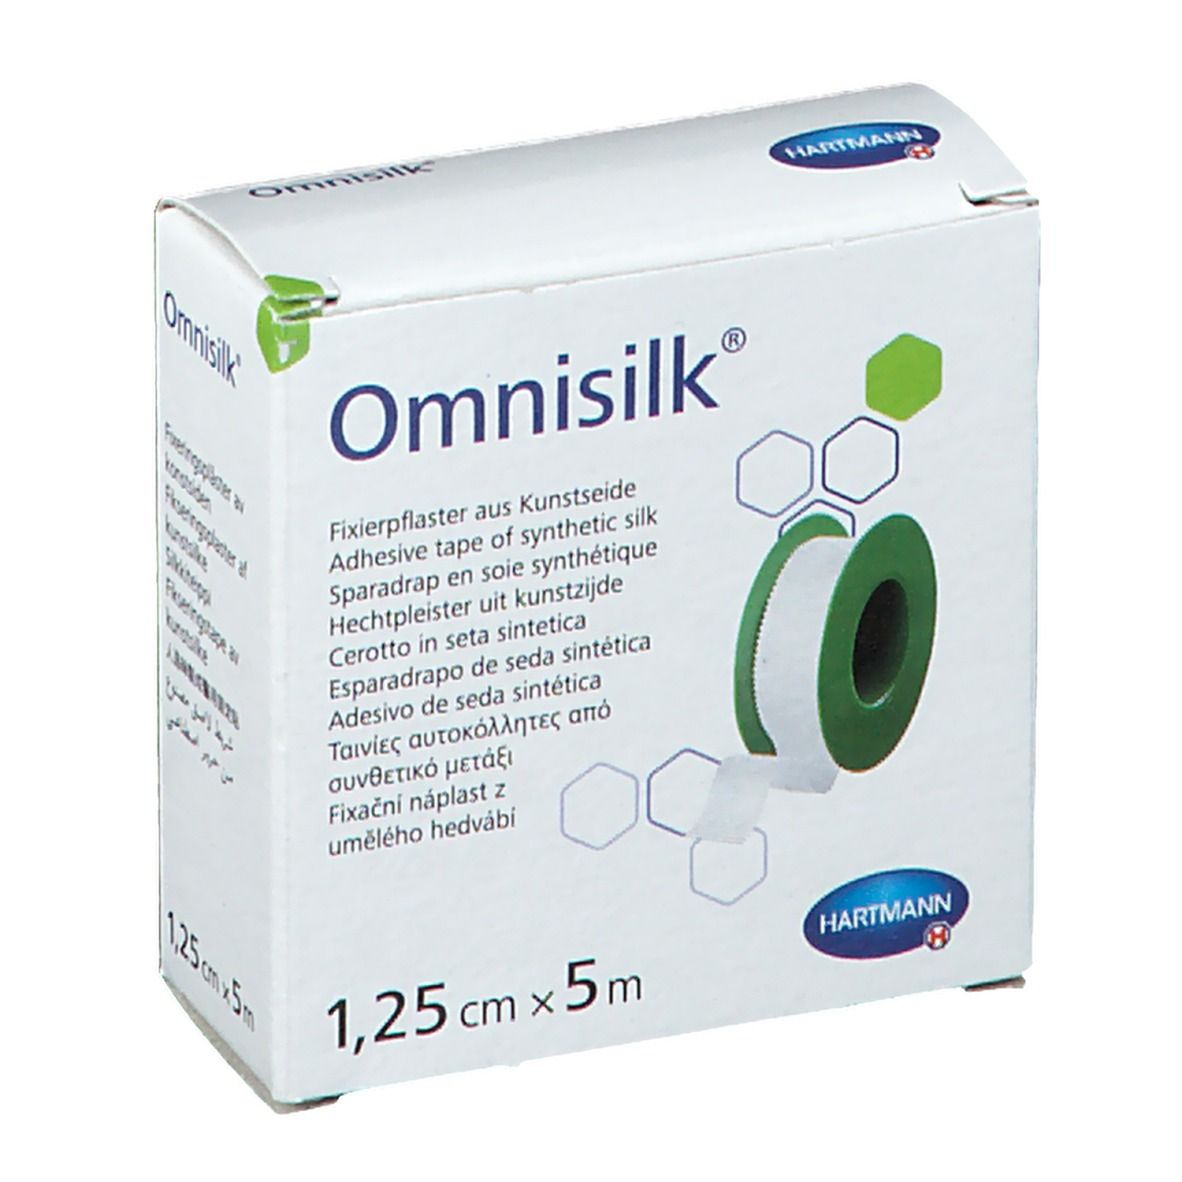 Image of Omnisilk® Fixierpflaster aus Kunstseide 1,25 cm x 5 m